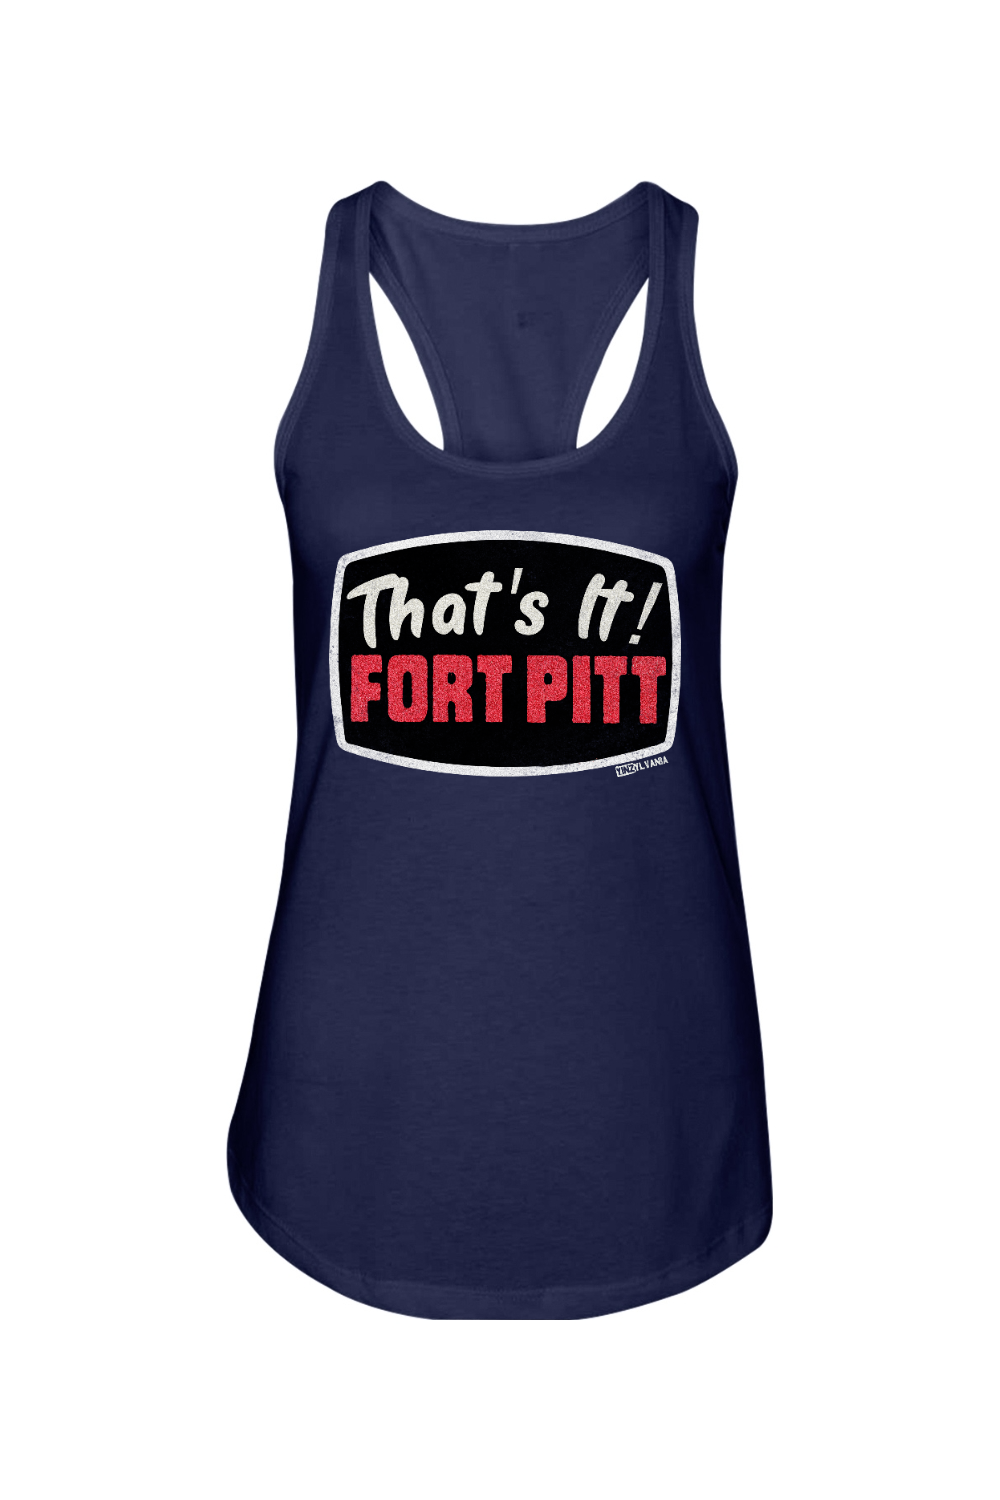 That's It Fort Pitt - Next Level Ladies Racerback Tank - Yinzylvania